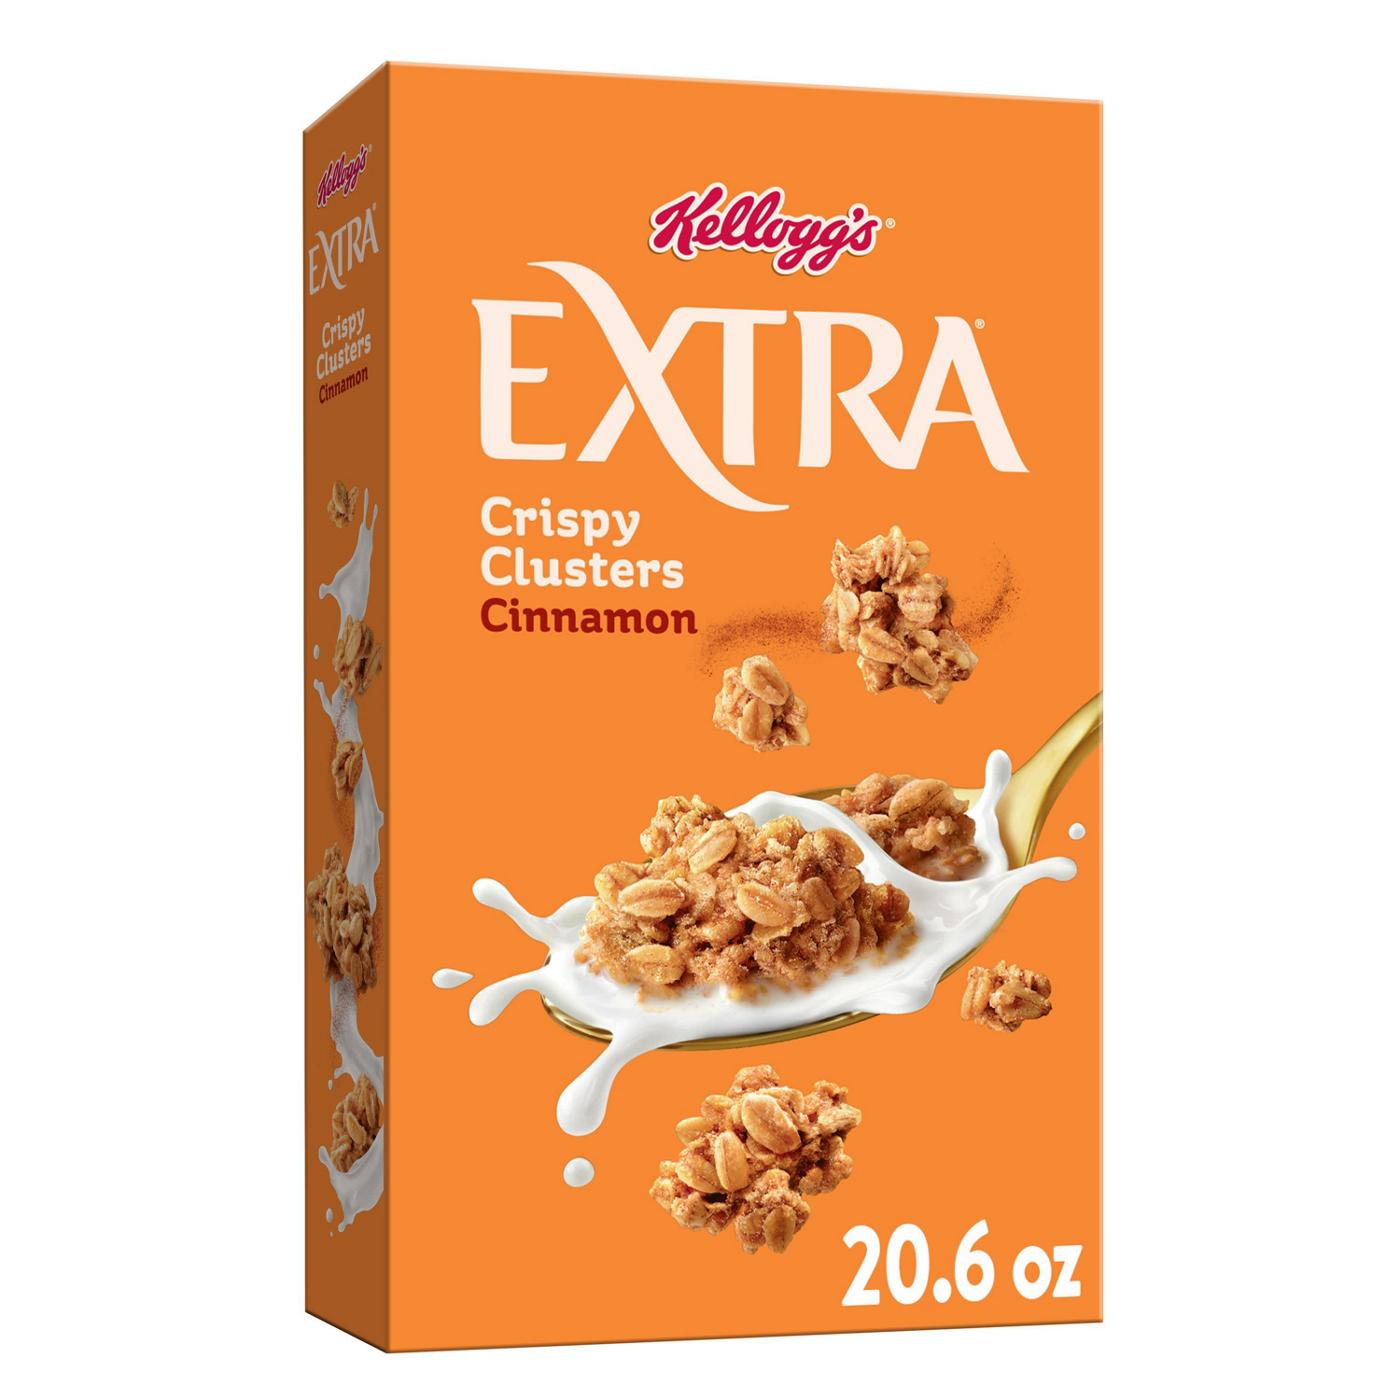 Kellogg's Extra Crispy Clusters Cinnamon Cereal; image 1 of 5